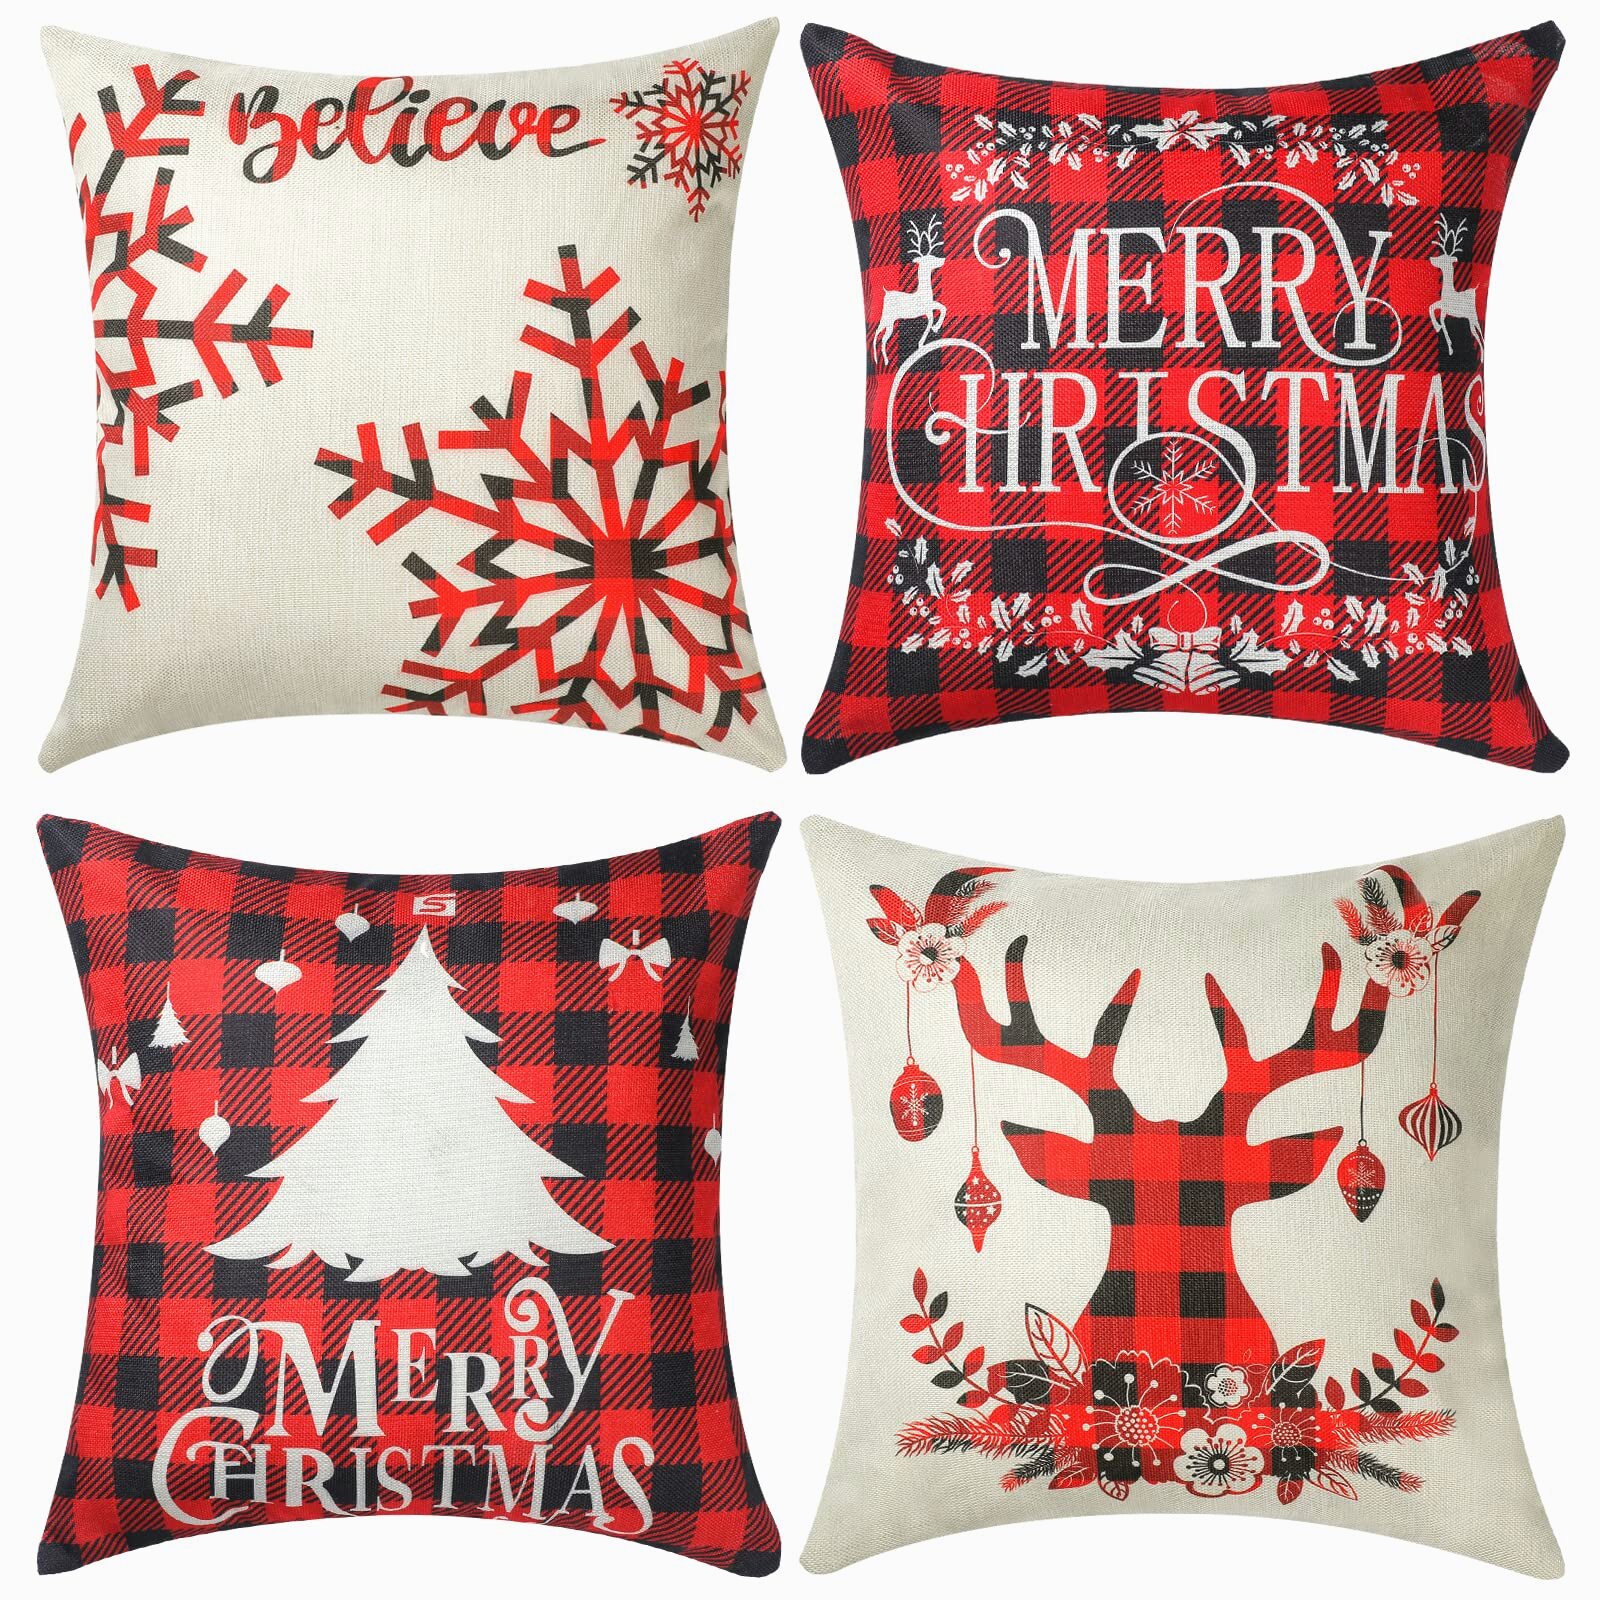 Merry Christmas Pillow Case Sofa Throw Cushion Cover Pillowcase Home Car Decor 